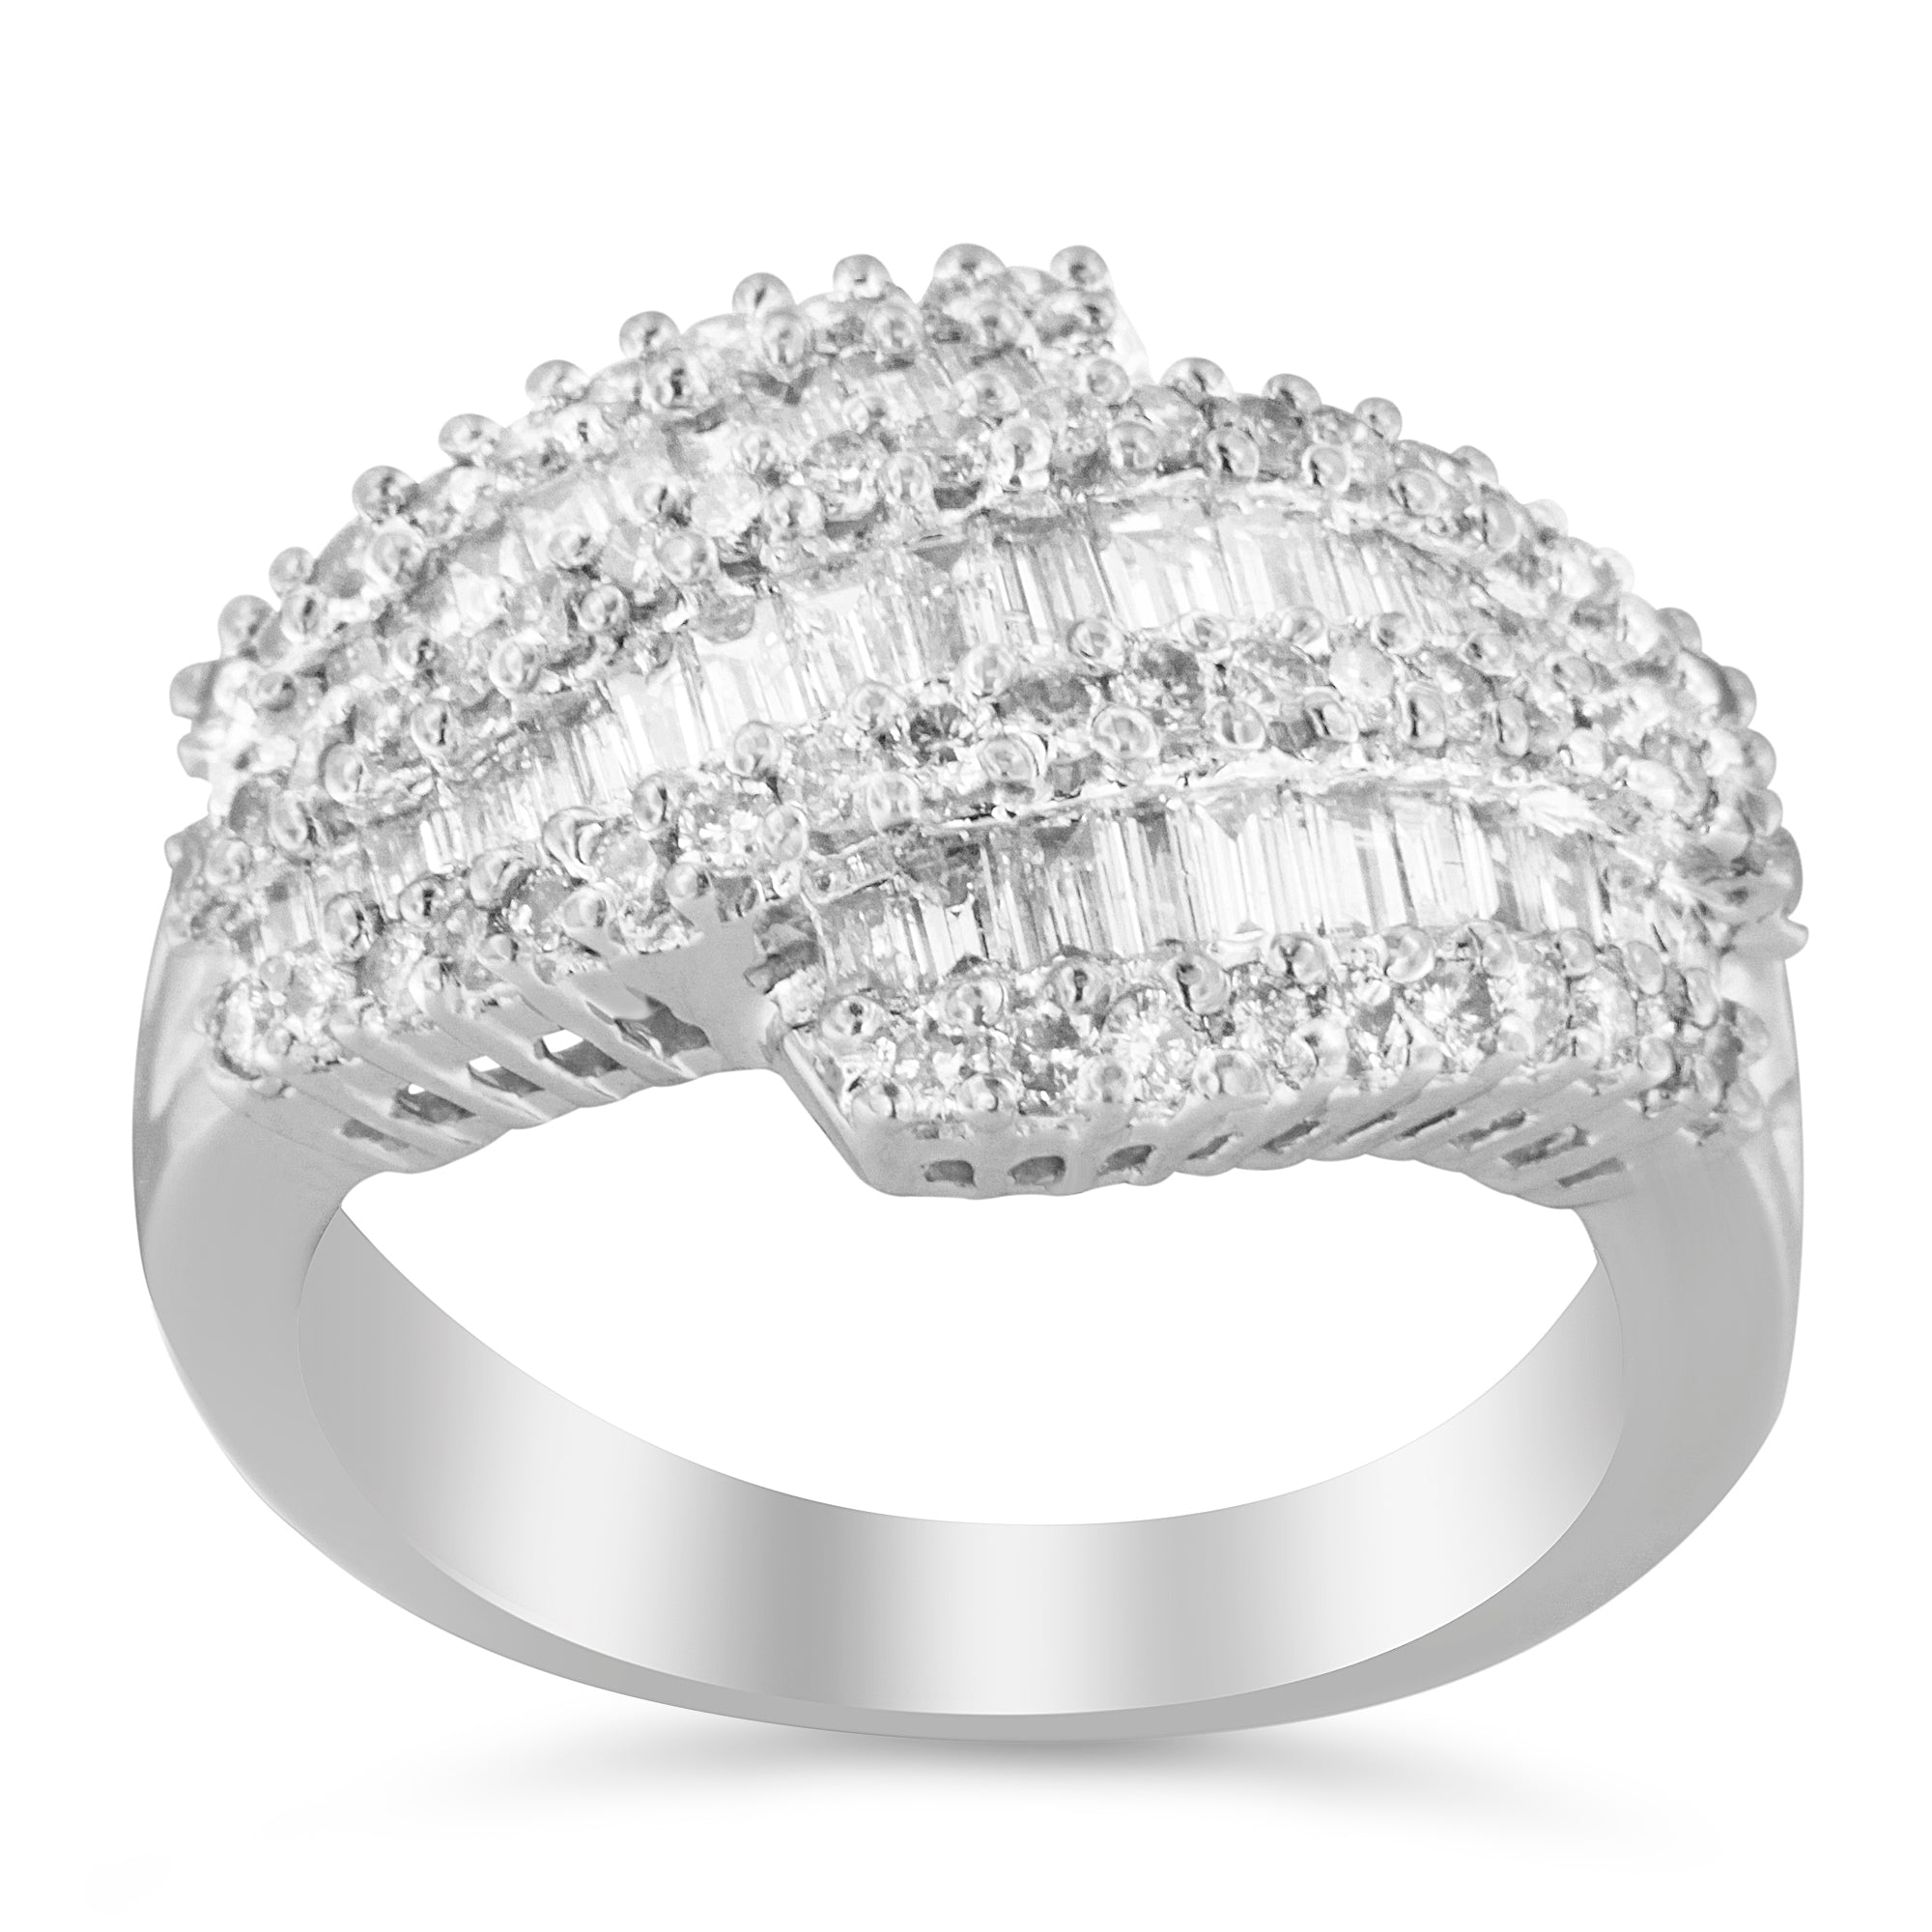 14K White Gold Diamond Cocktail Ring Band - Size 6-1/2